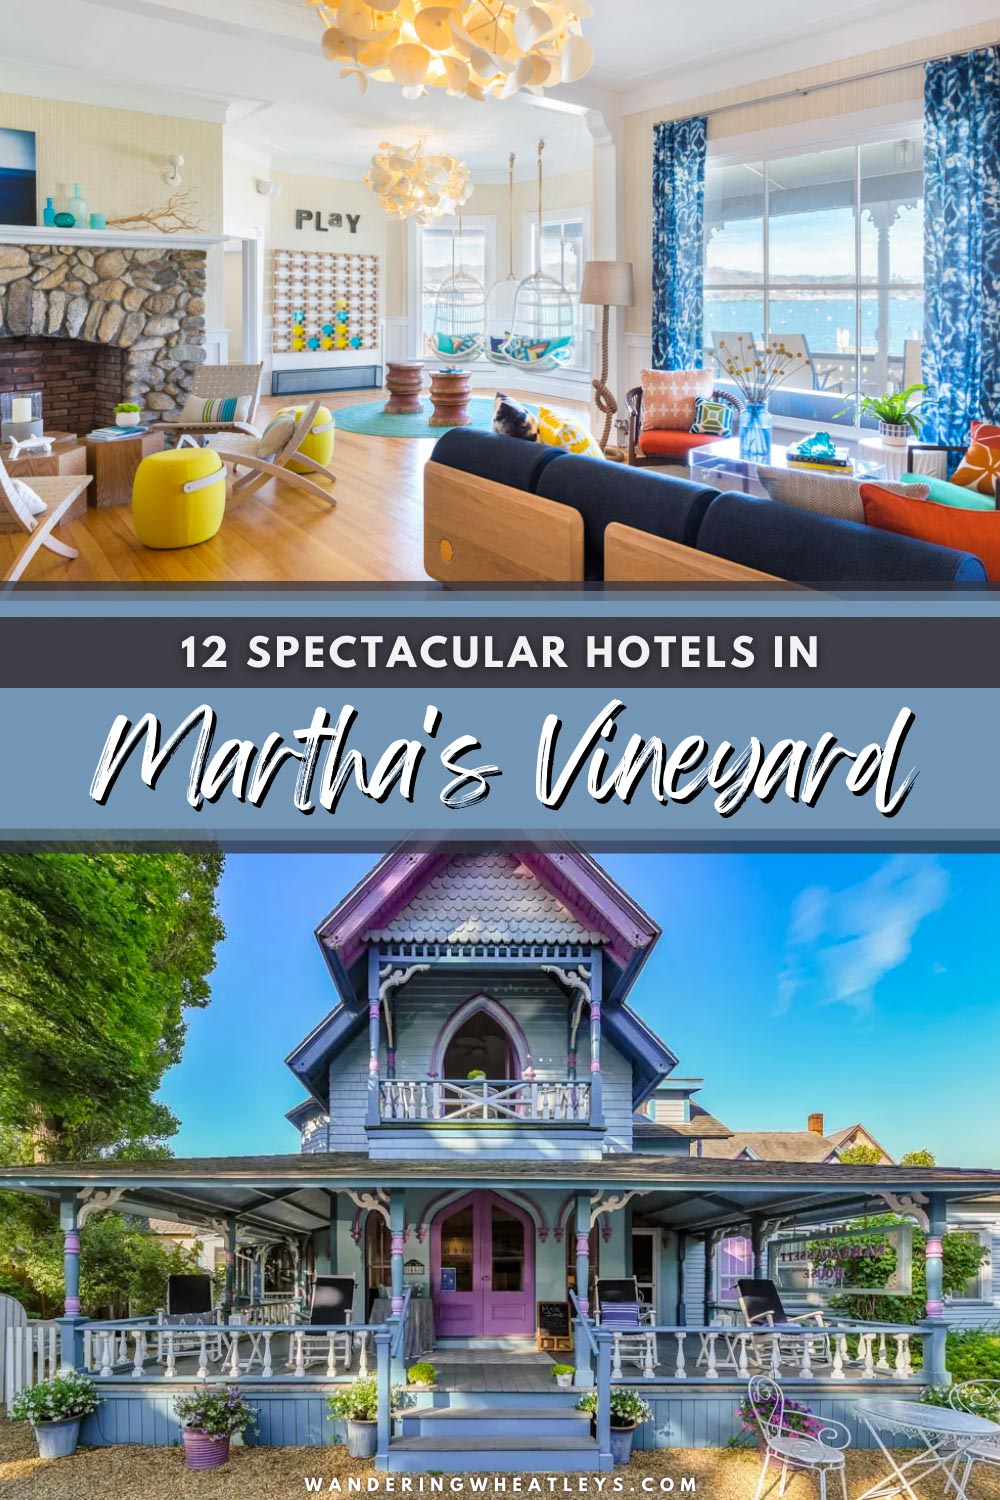 The Best Hotels in Martha's Vineyard